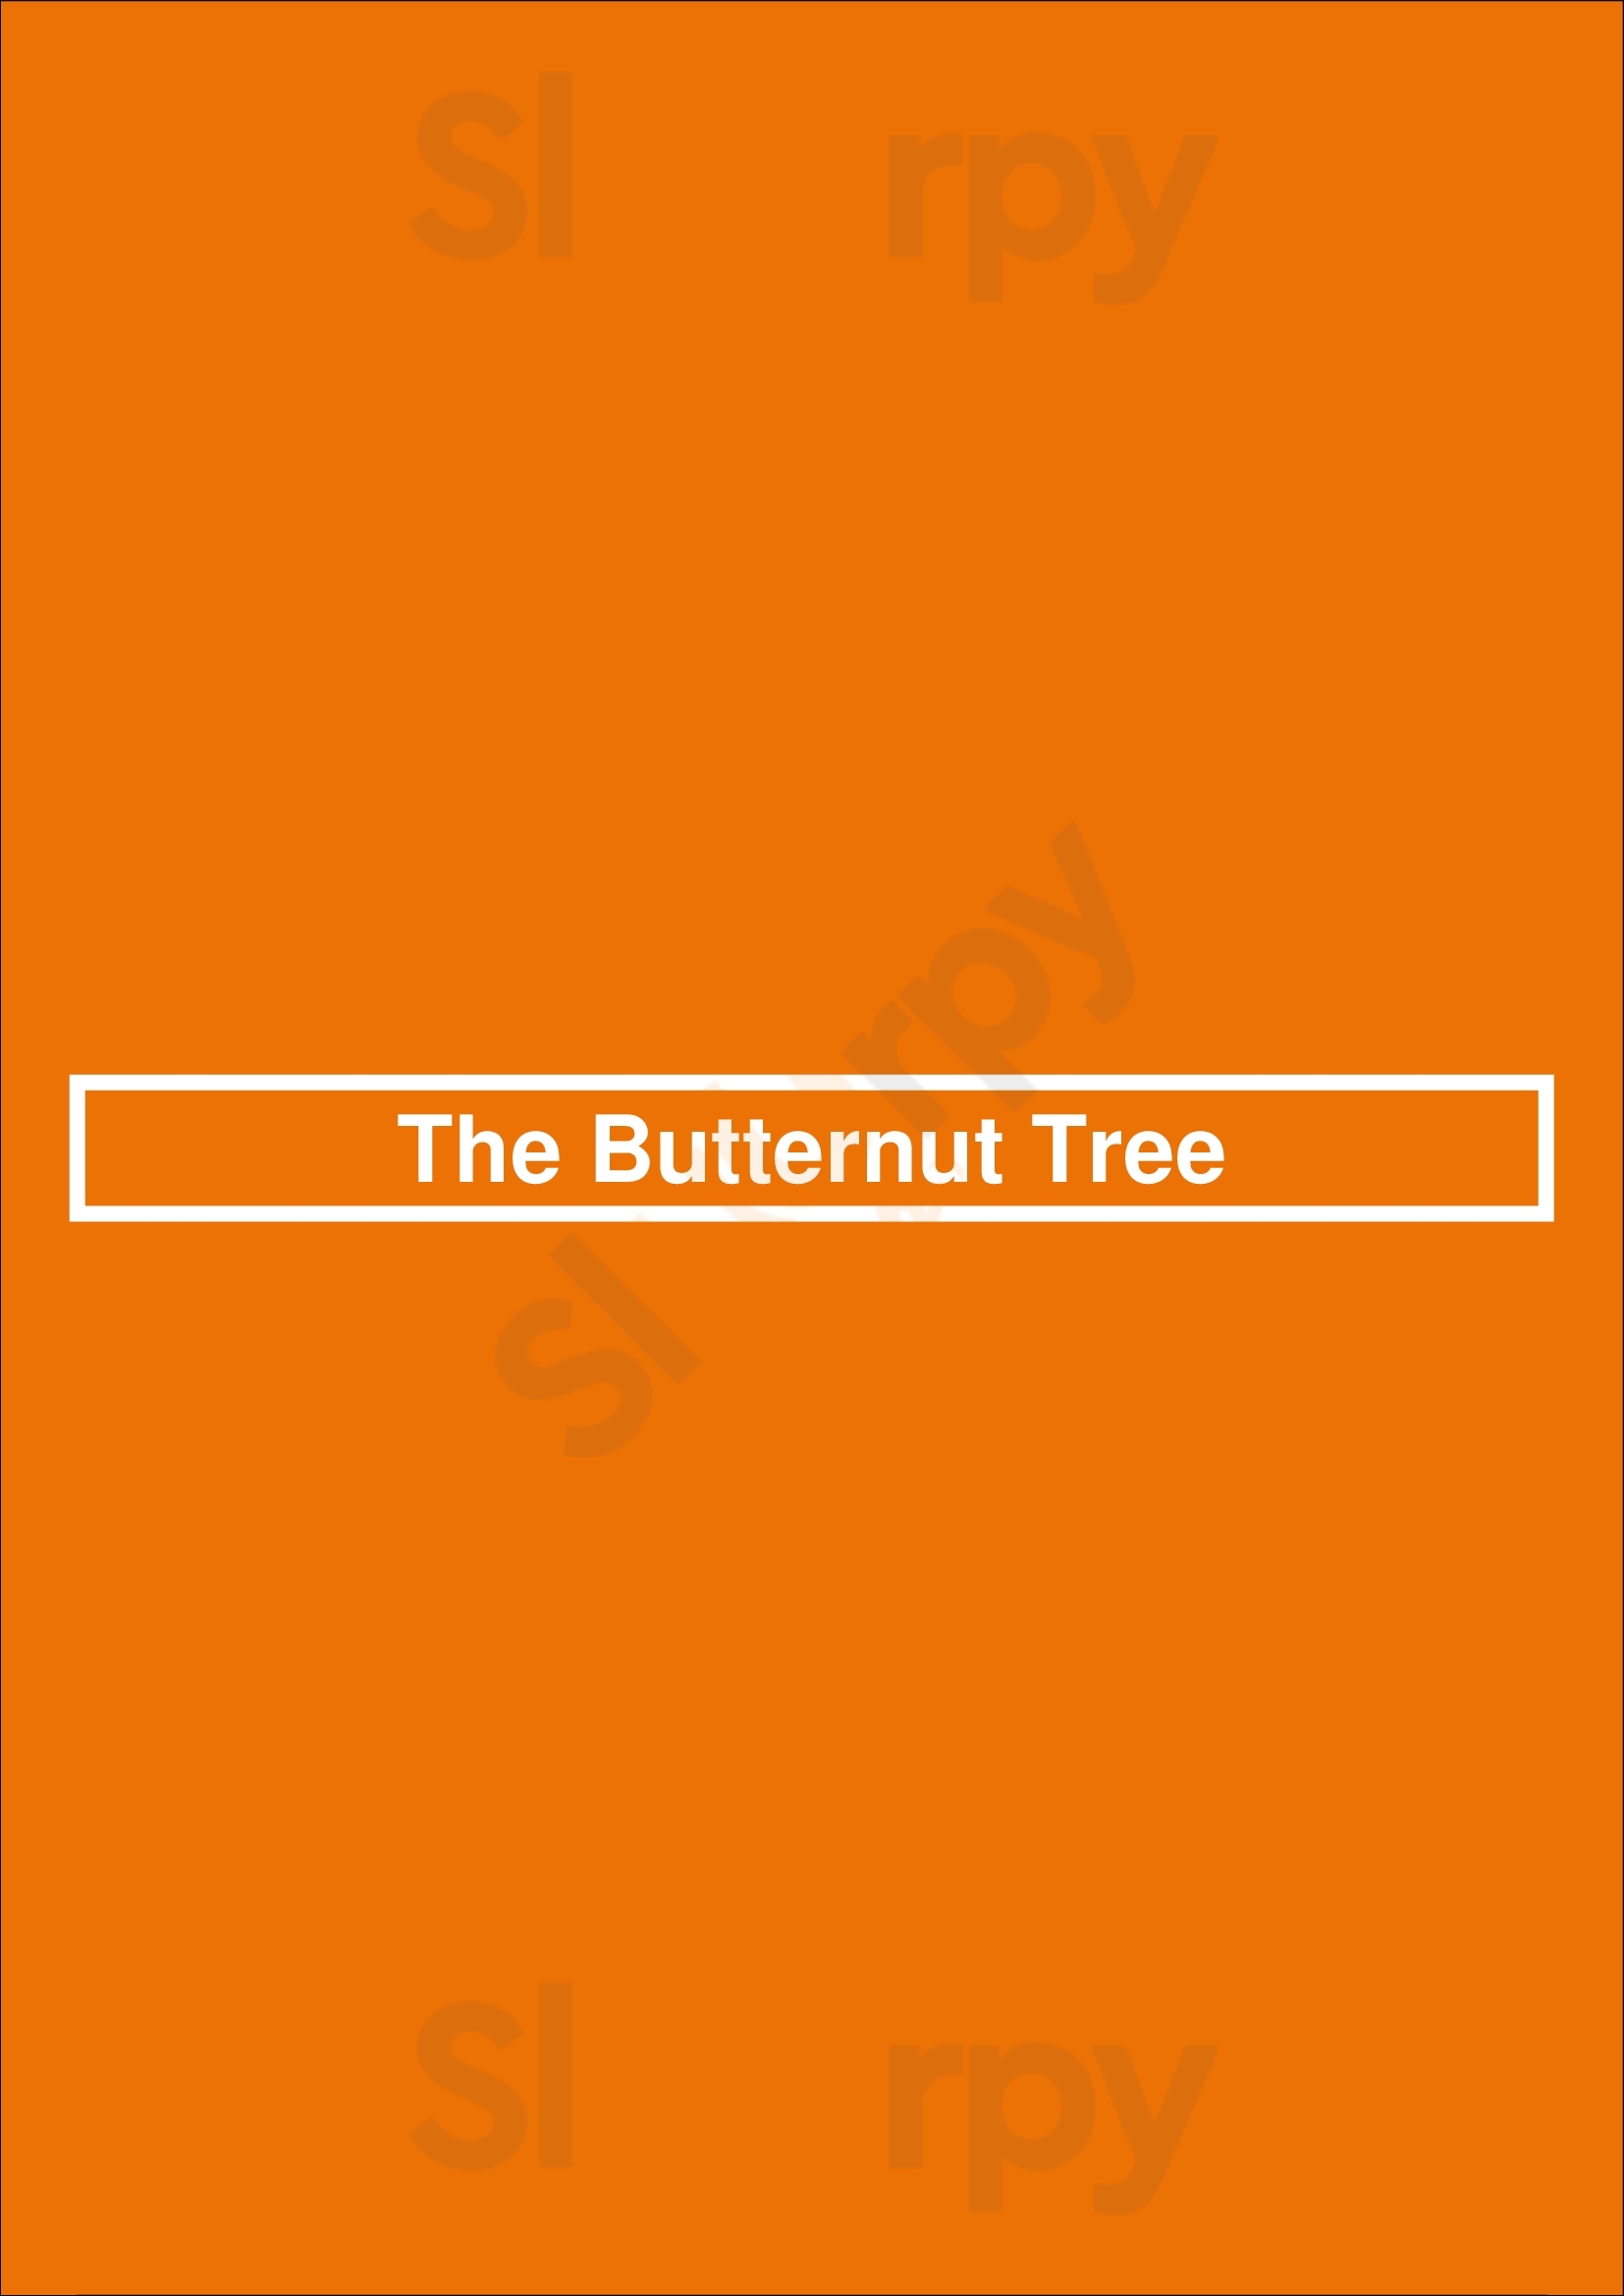 The Butternut Tree Edmonton Menu - 1